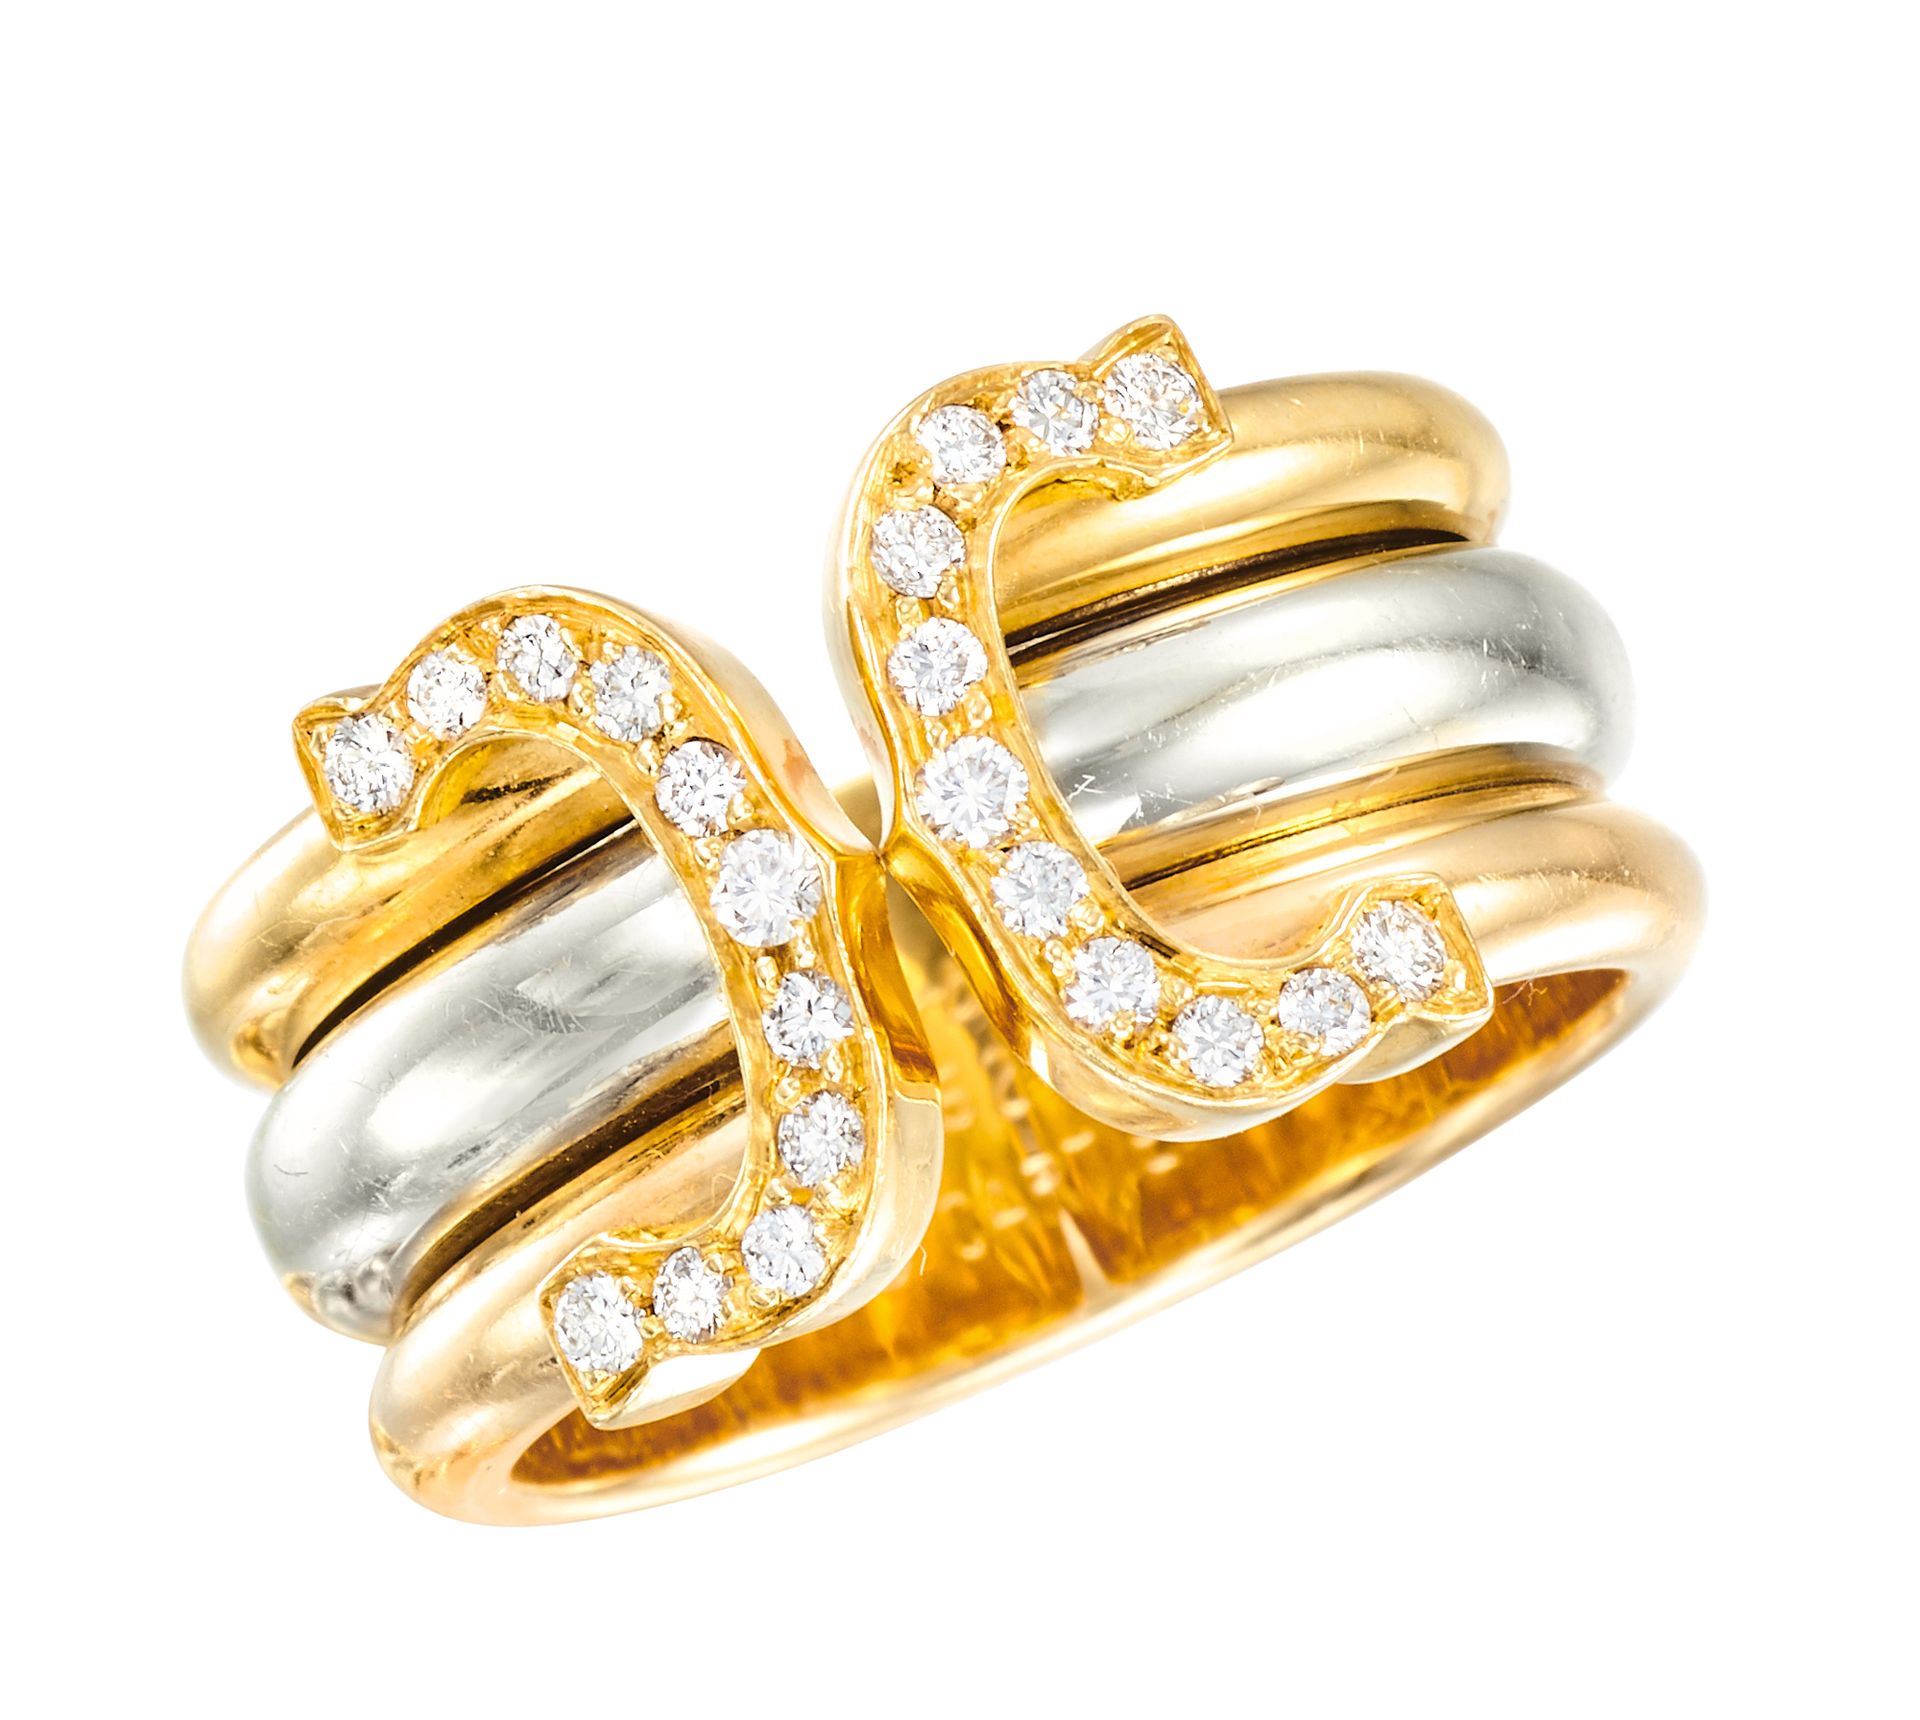 CARTIER 双 C "系列
三色金轧花带戒指，两端镶嵌明亮式切割钻石
已签名并编号
约 1997 年
总重：49 - 长：0.9 厘米
重量：7.20 克（&hellip;